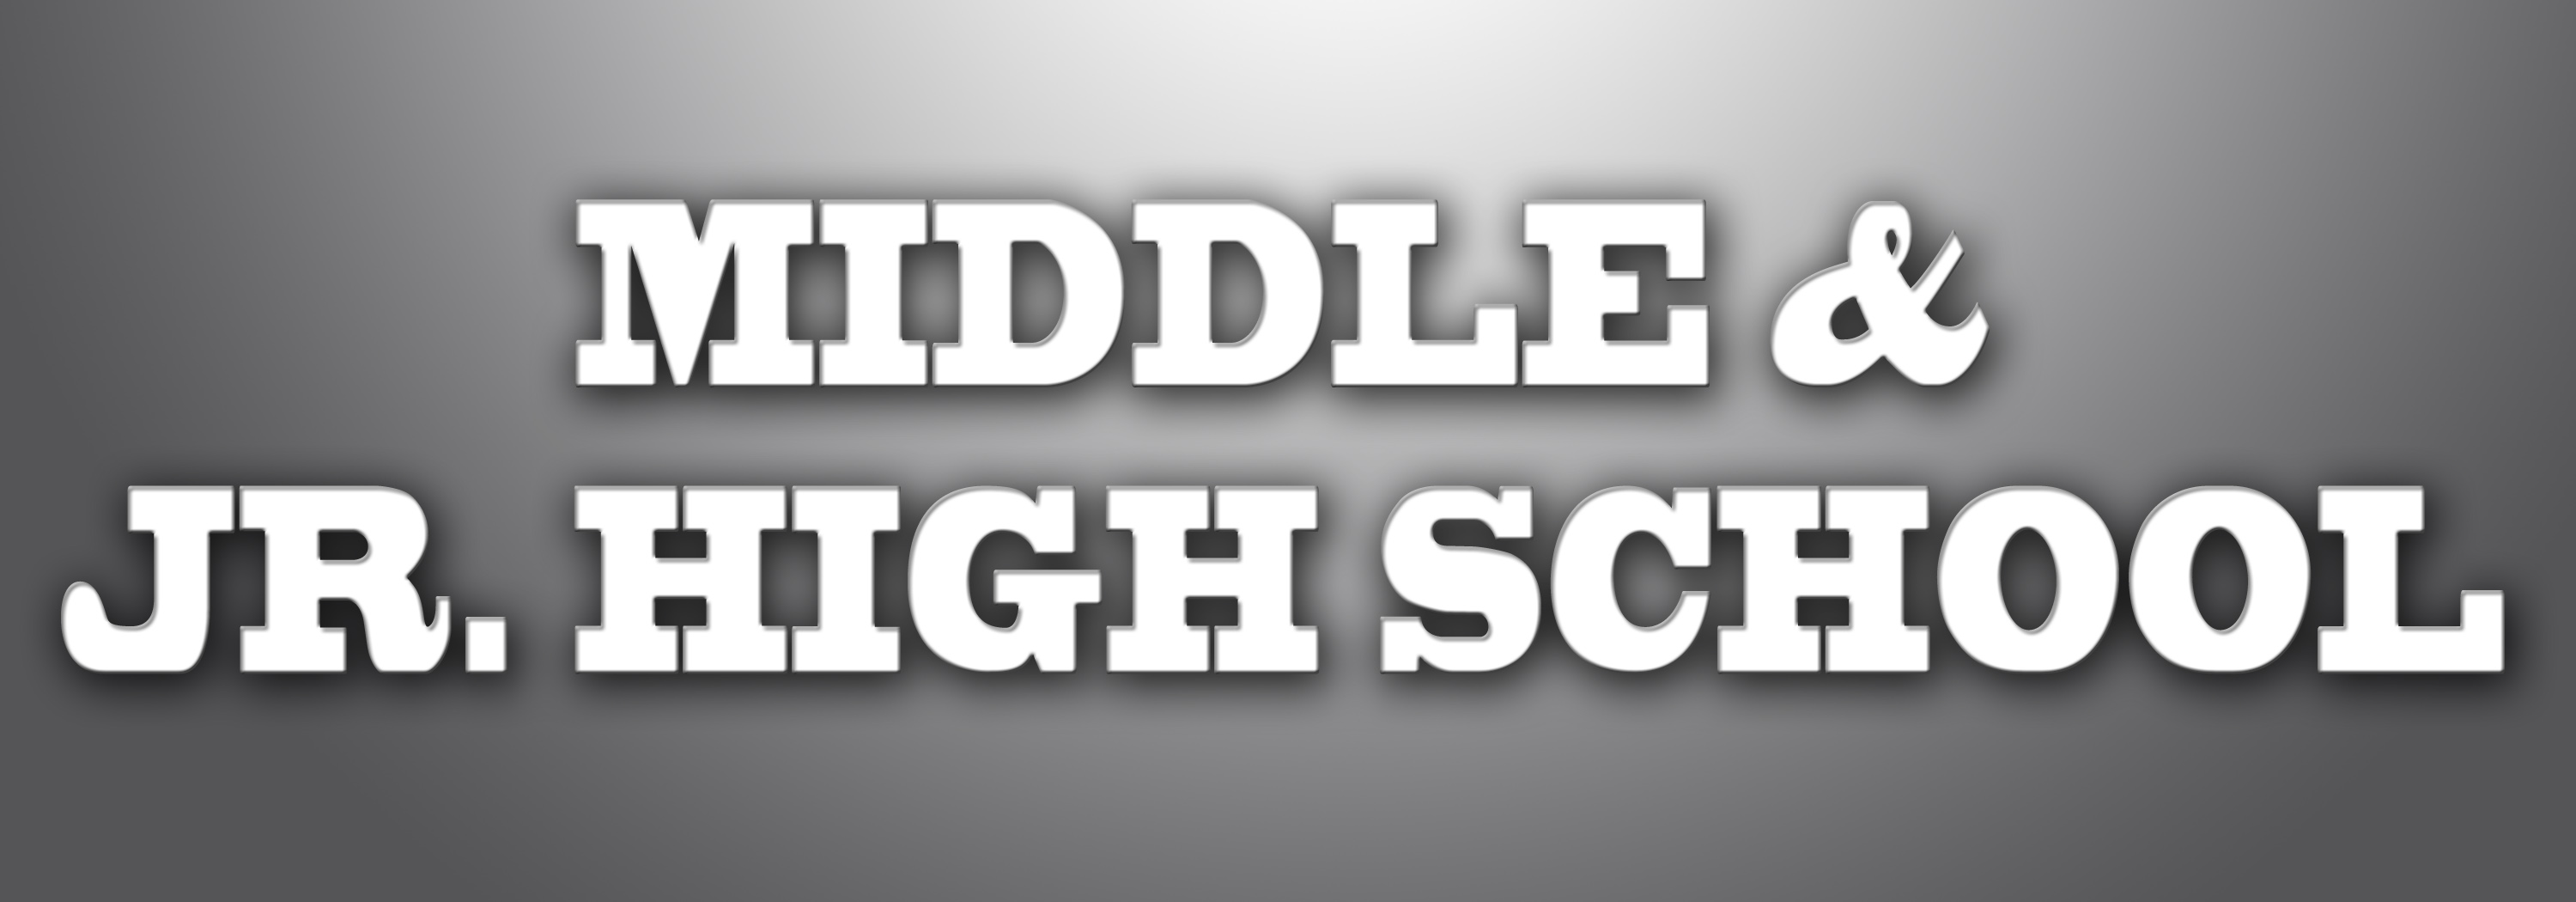 Middle & Jr. High School